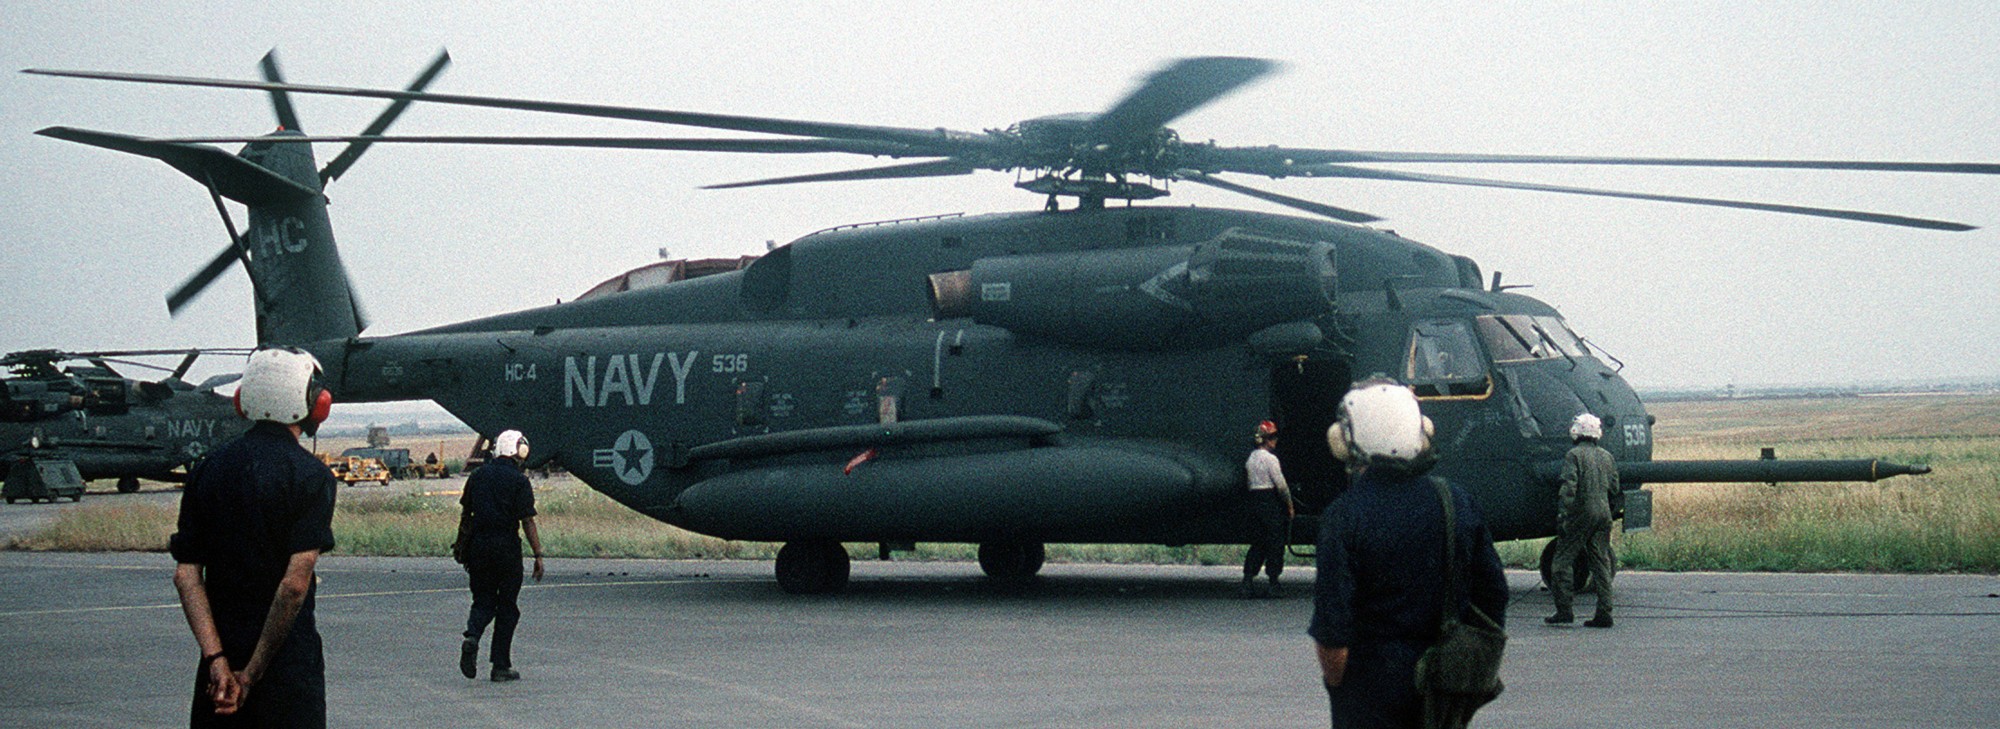 hc-4 black stallions helicopter combat support squadron ch-53e super stallion 43 operation provide comfort